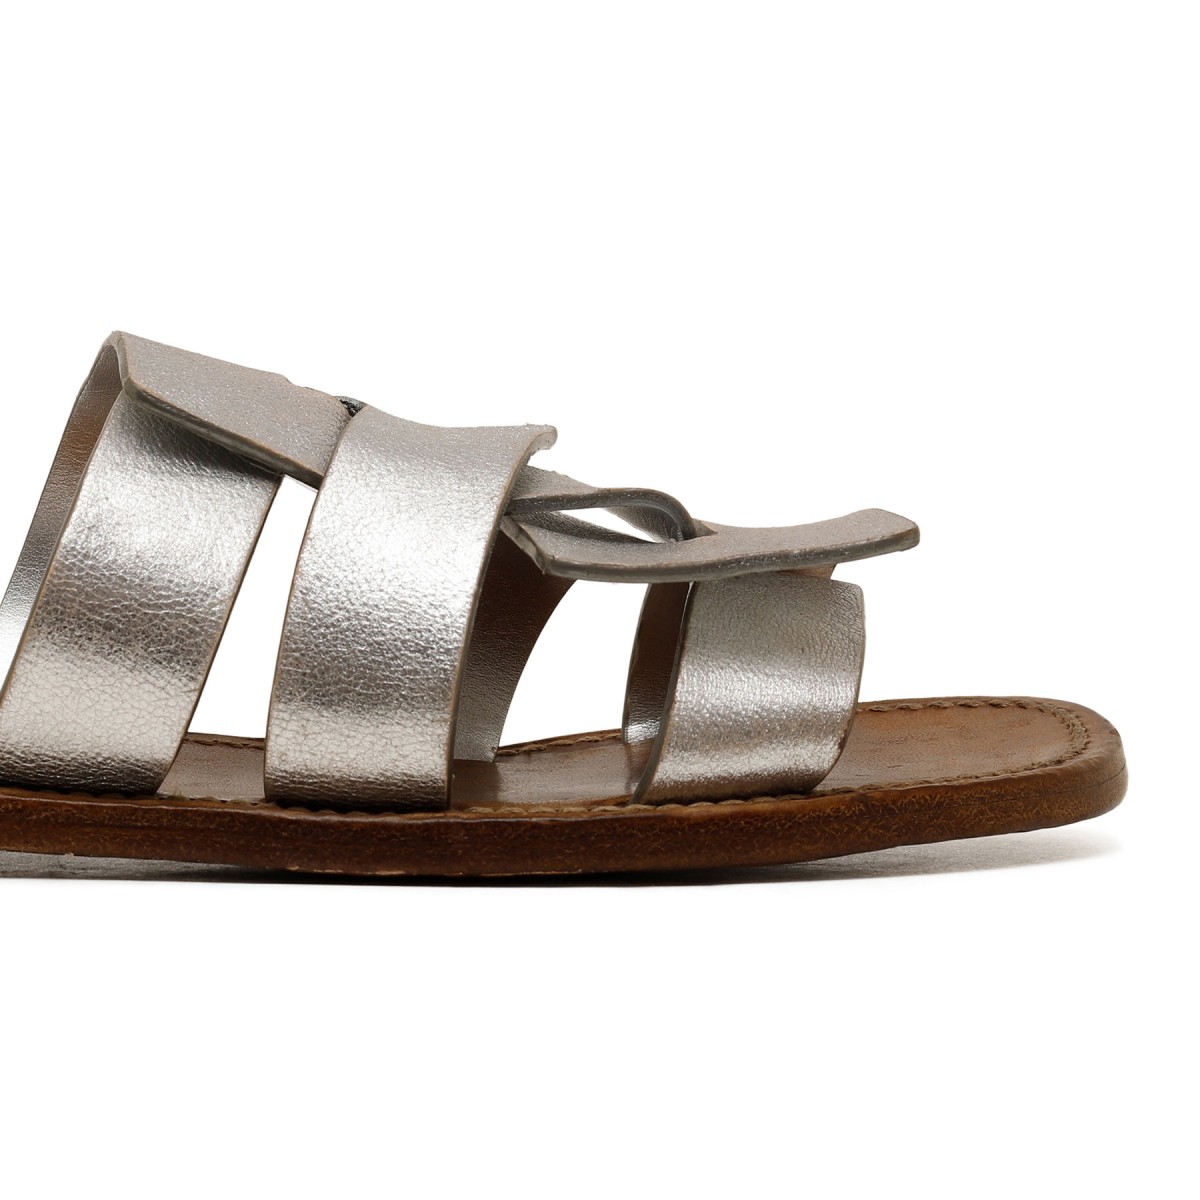 Metallic silver leather slide sandals